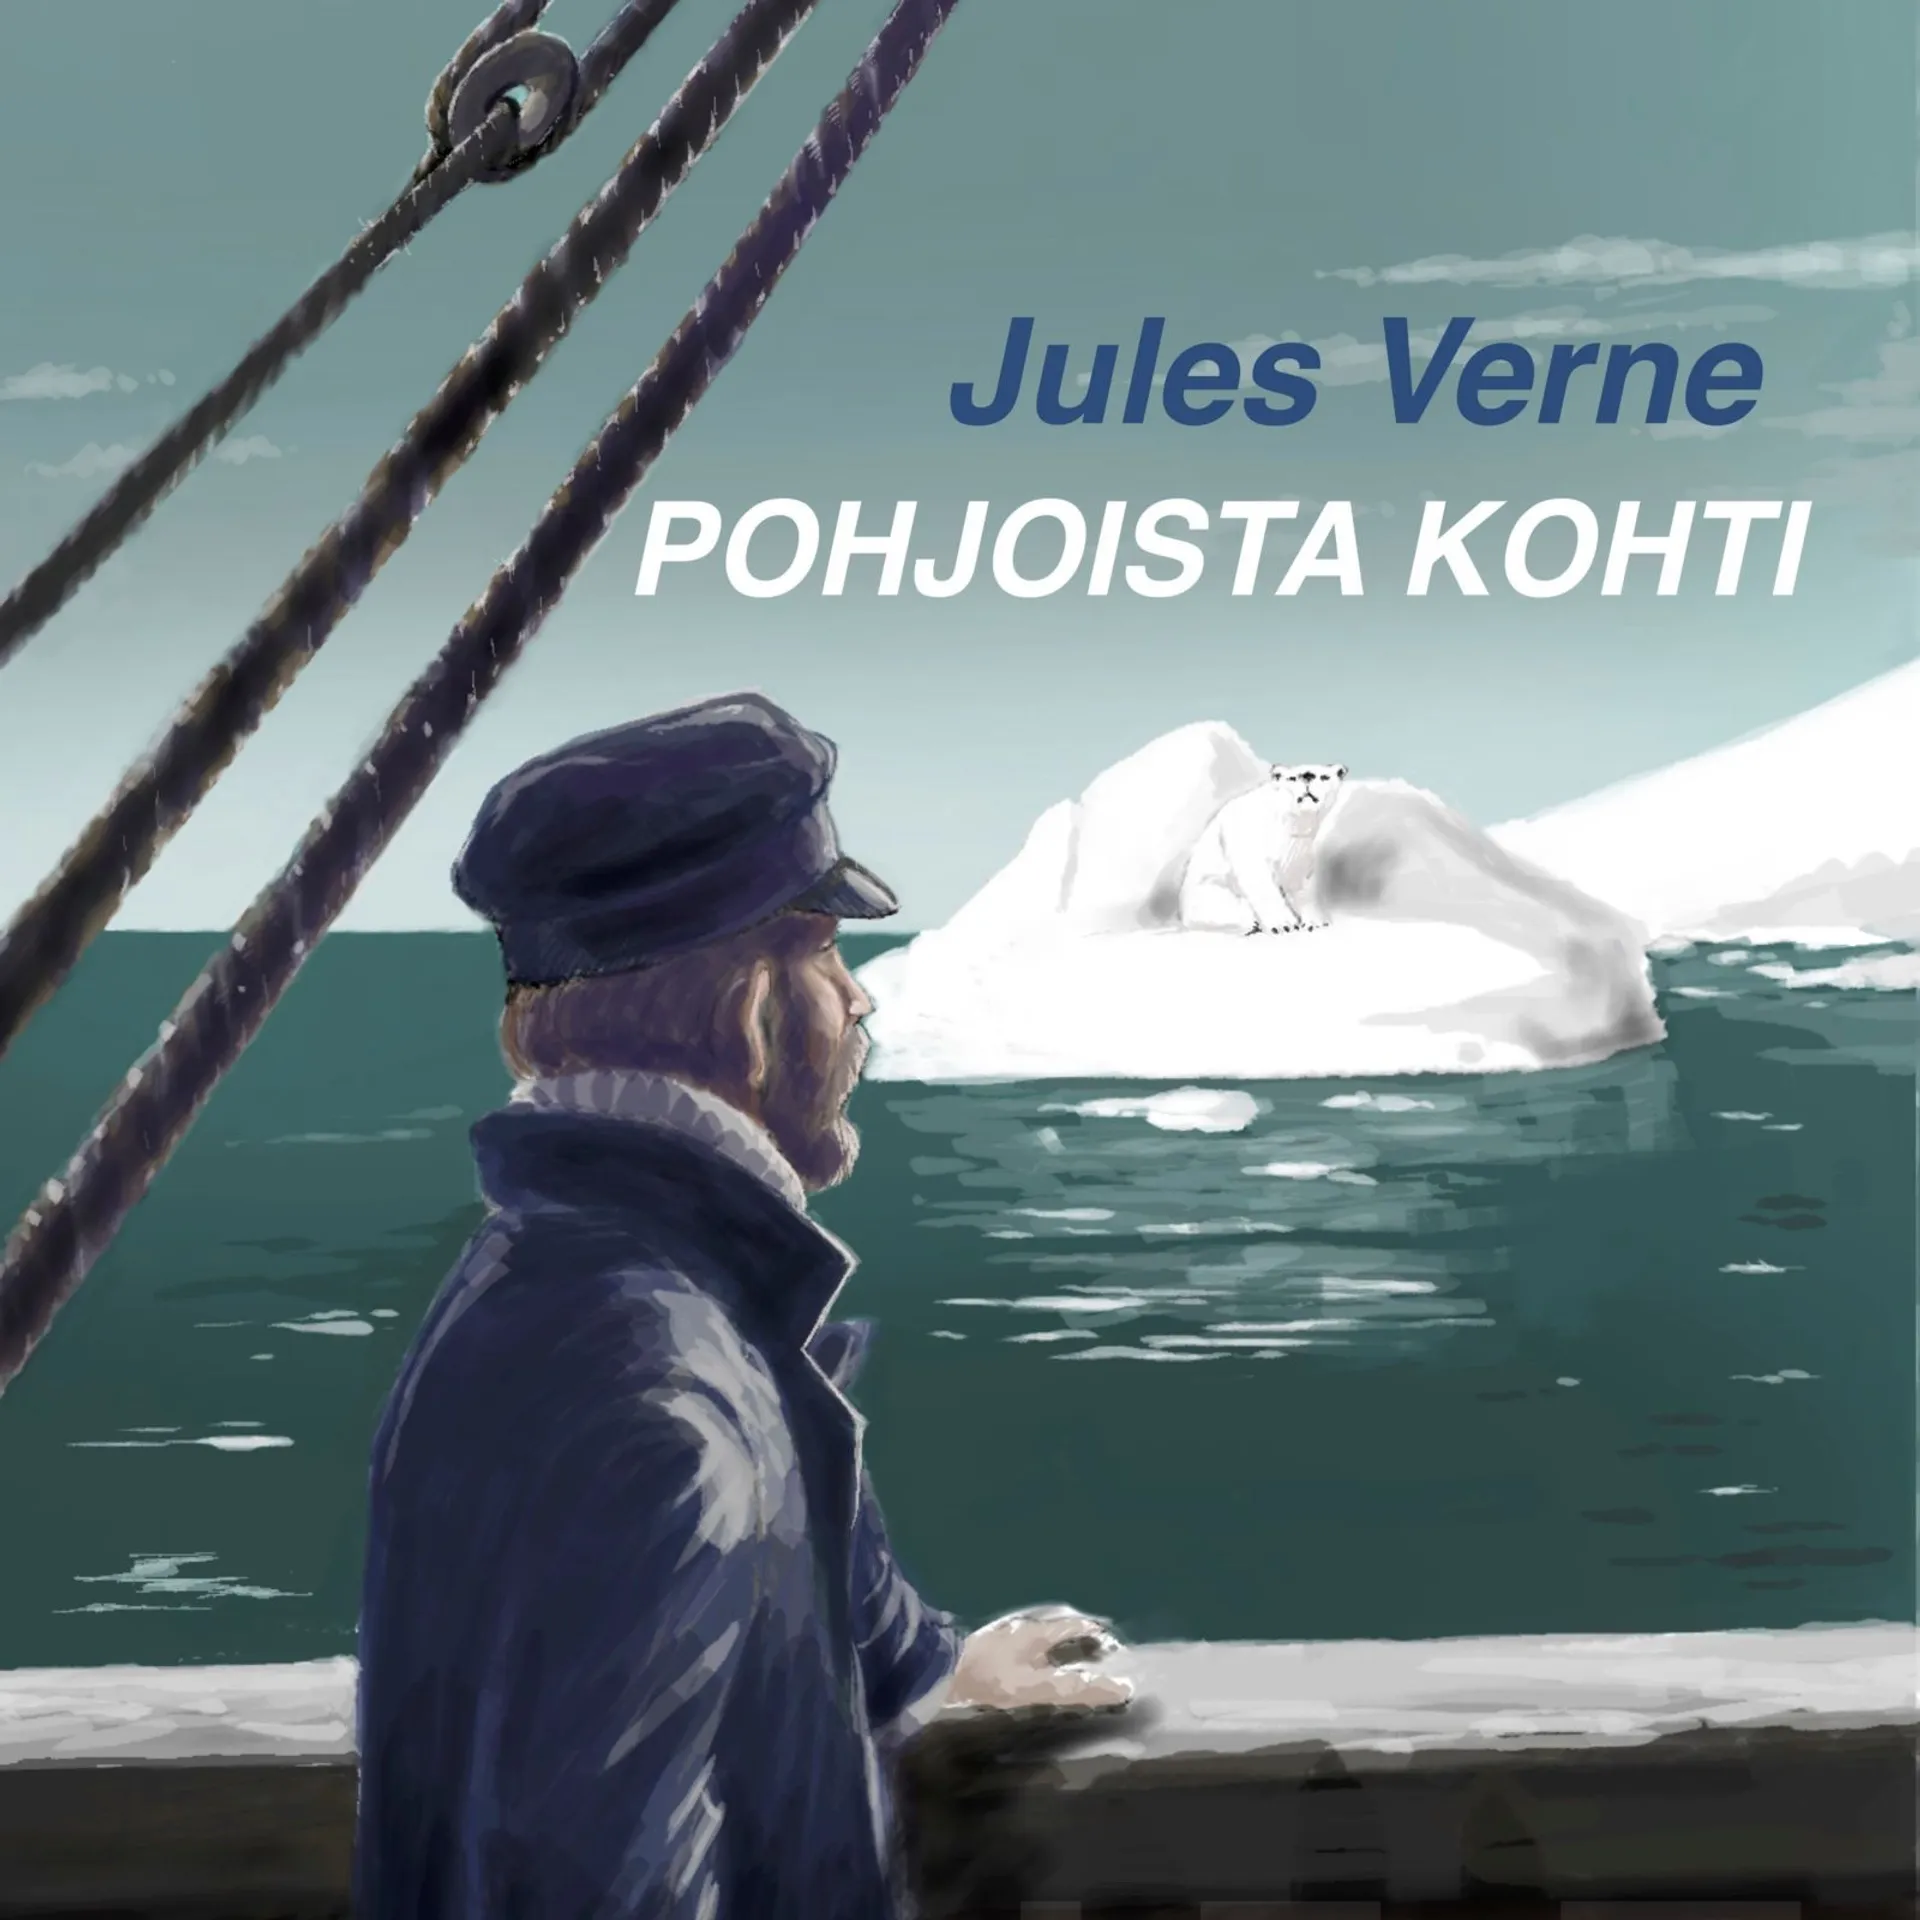 Verne, Pohjoista kohti (cd)